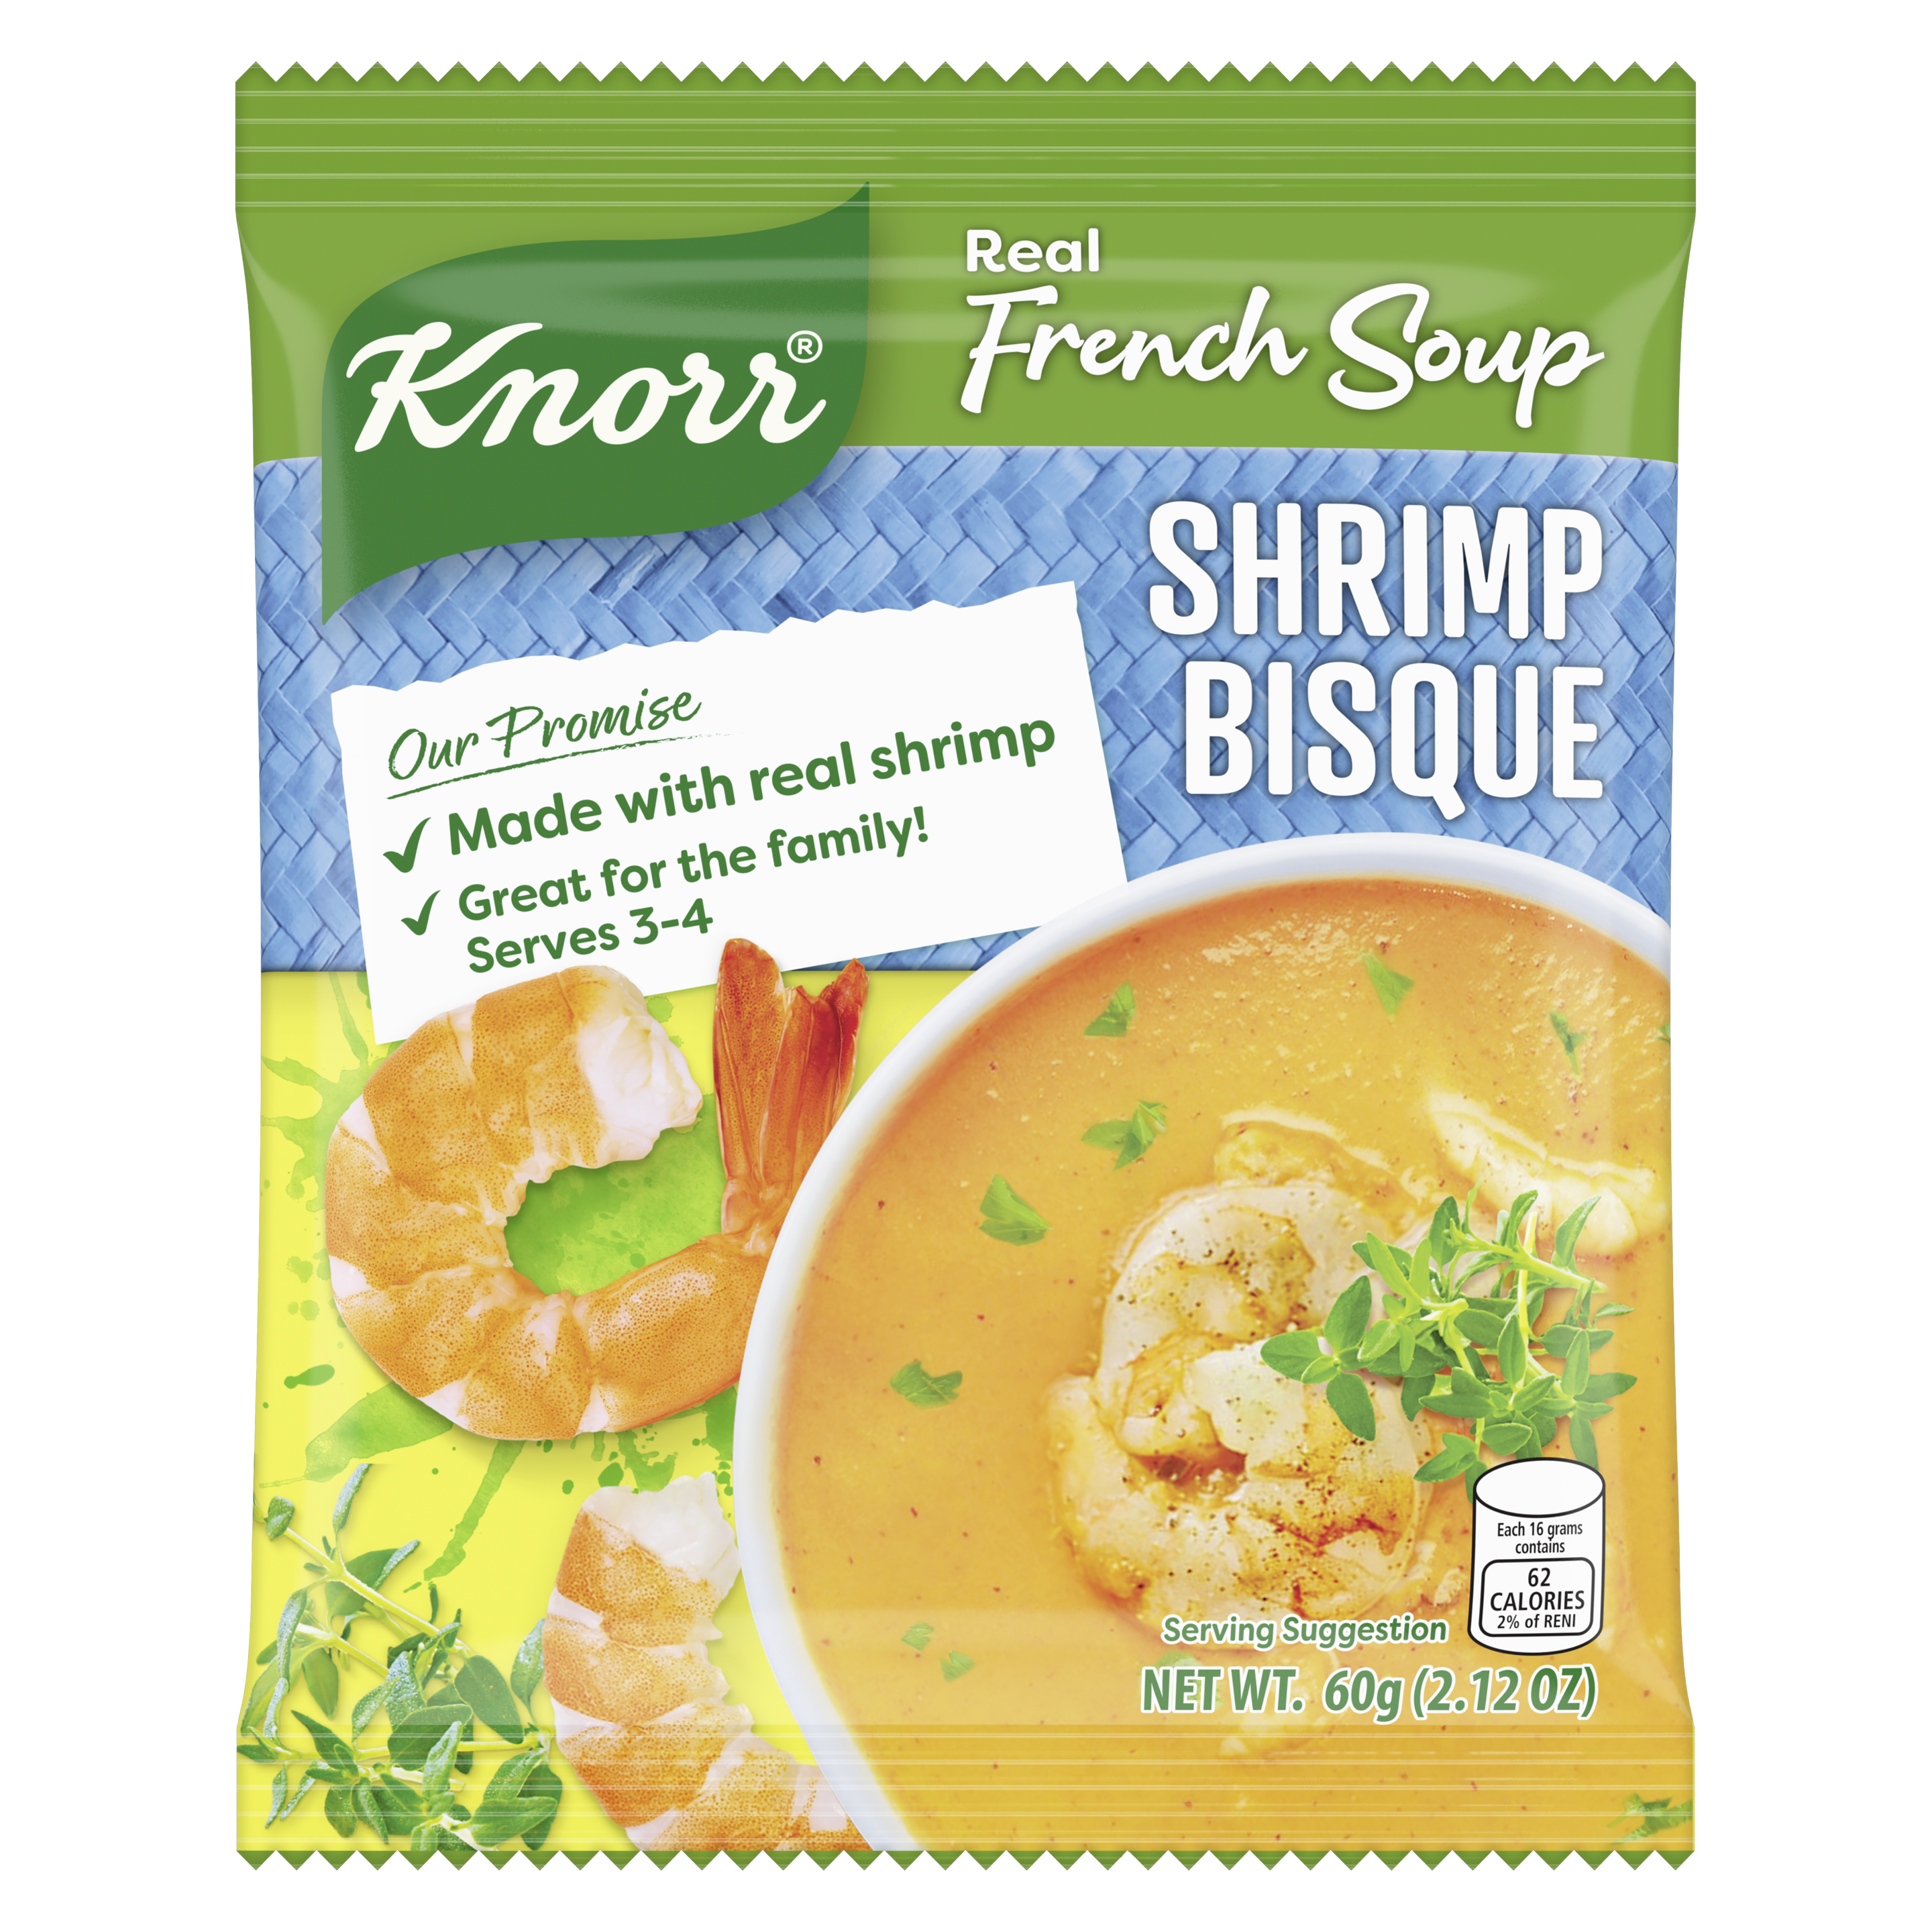 Knorr Shrimp Bisque Soup